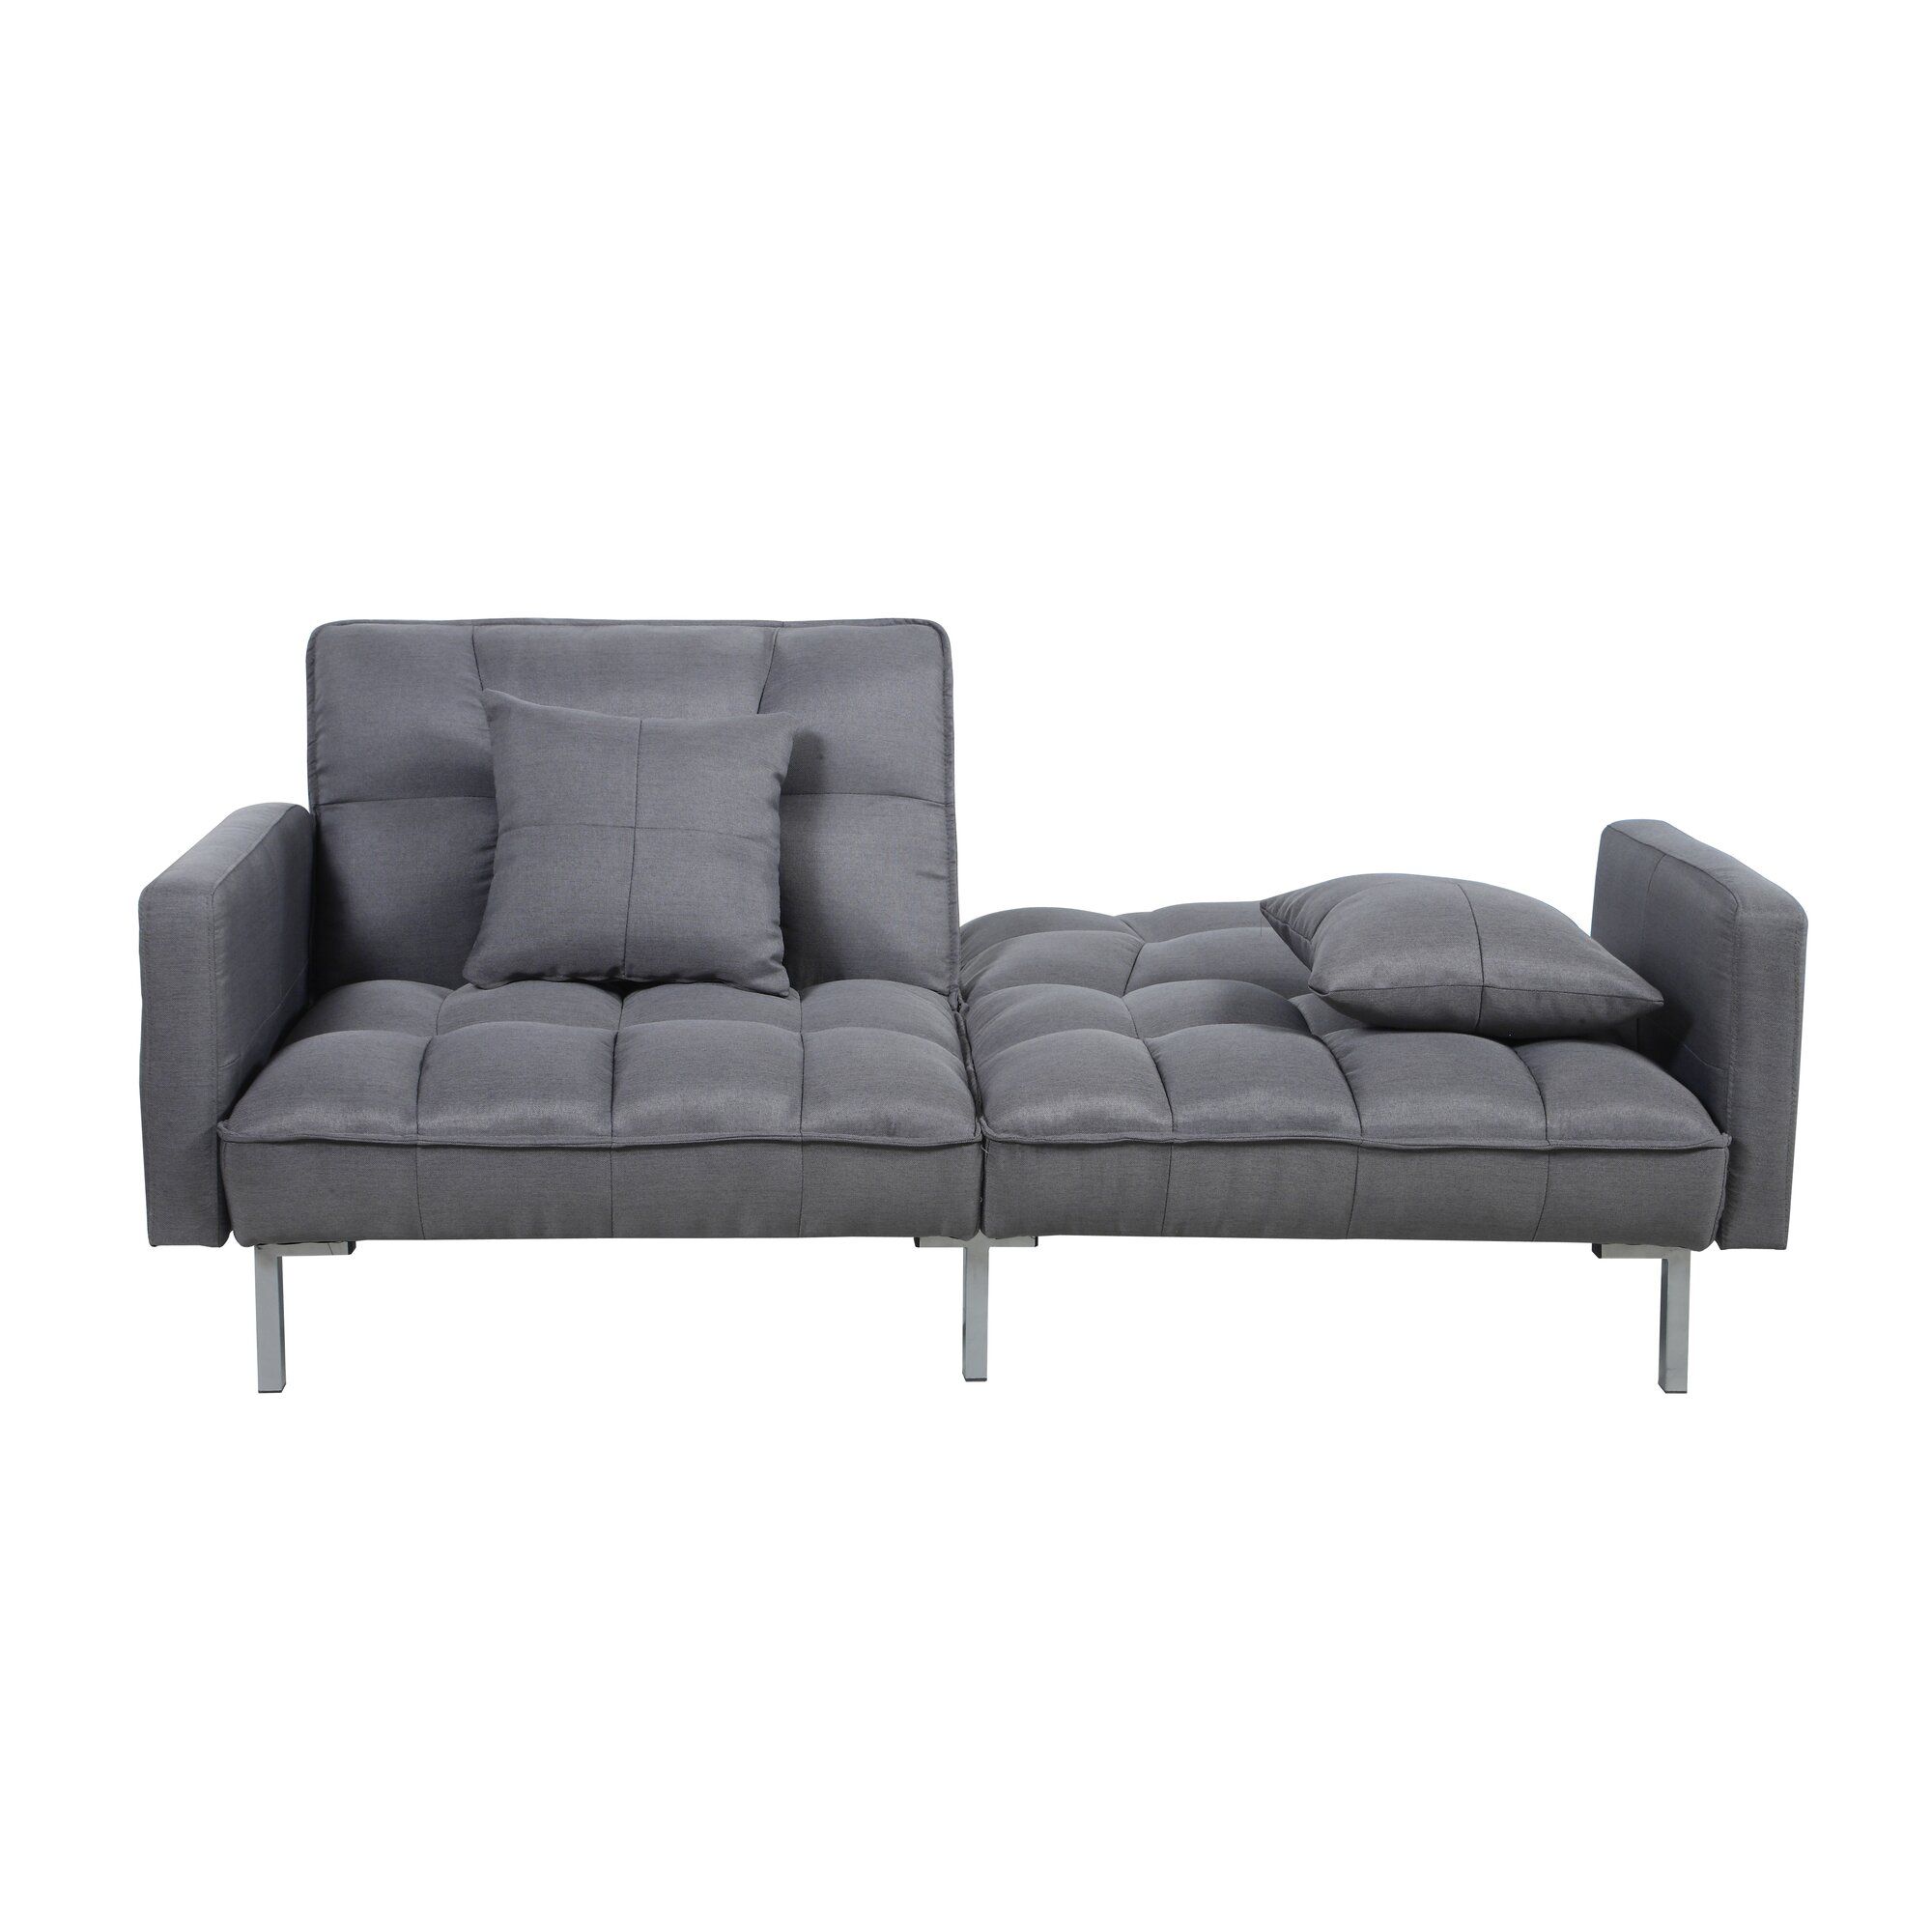 Convertible Sofa & Reviews | Allmodern Inside 8 Seat Convertible Sofas (View 19 of 20)